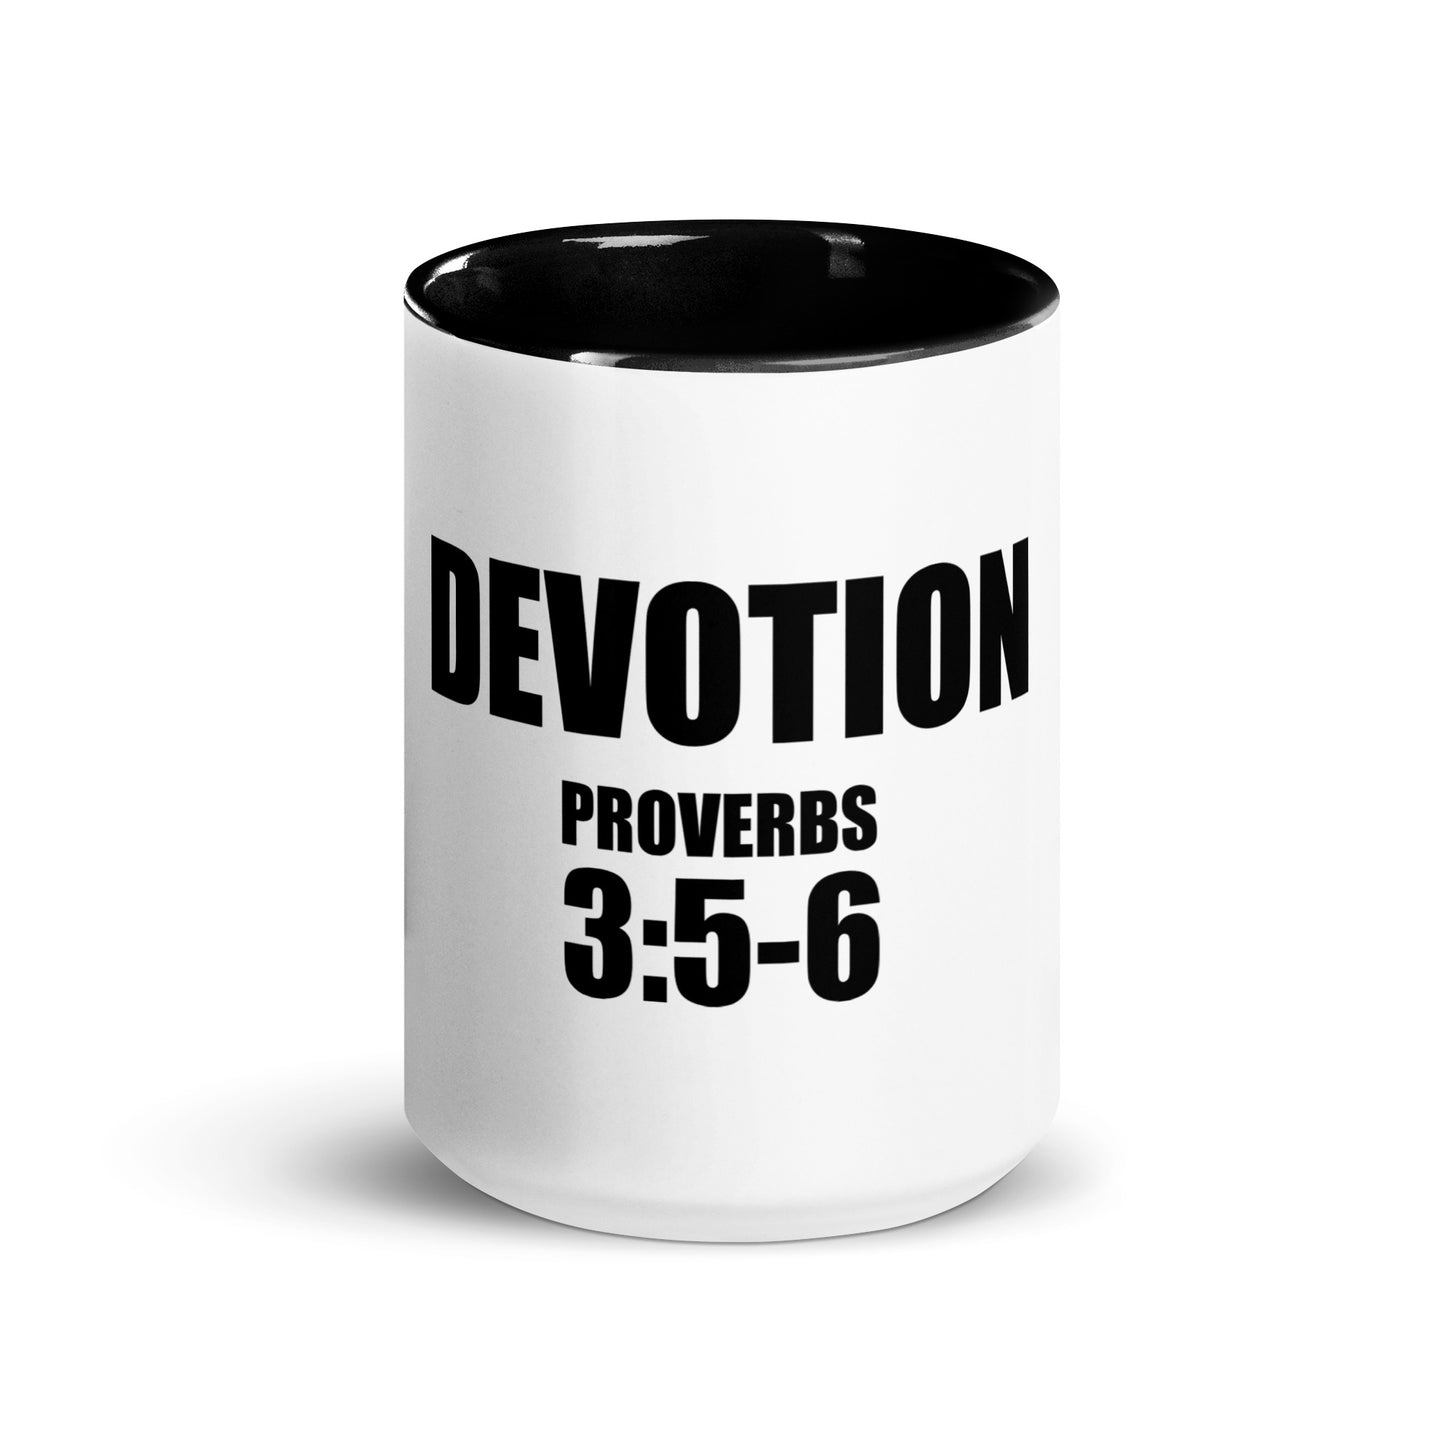 DEVOTION      PROVERBS 3:5-6 - Ceramic mug